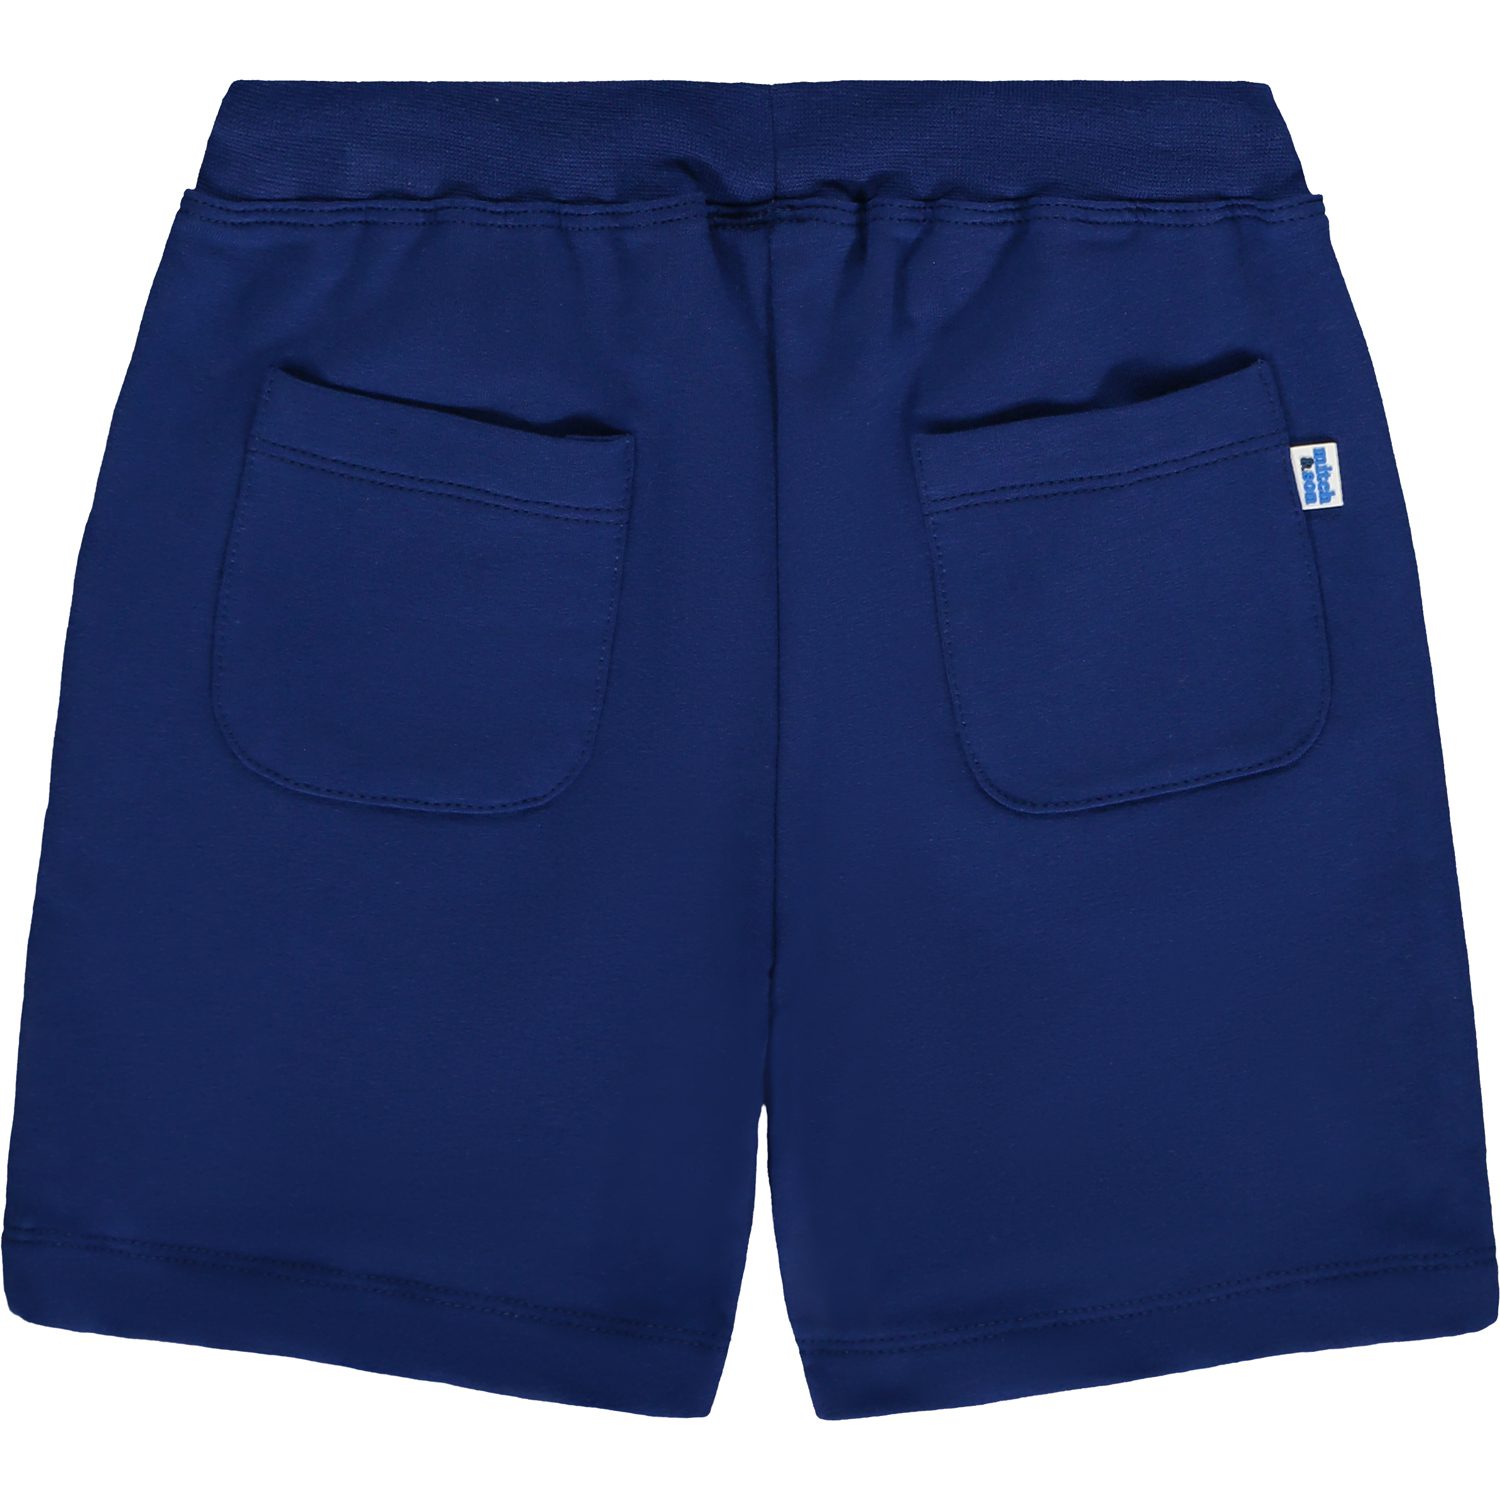 Mitch&Son Kodi blauw polo setje met logo achterkant korte broek